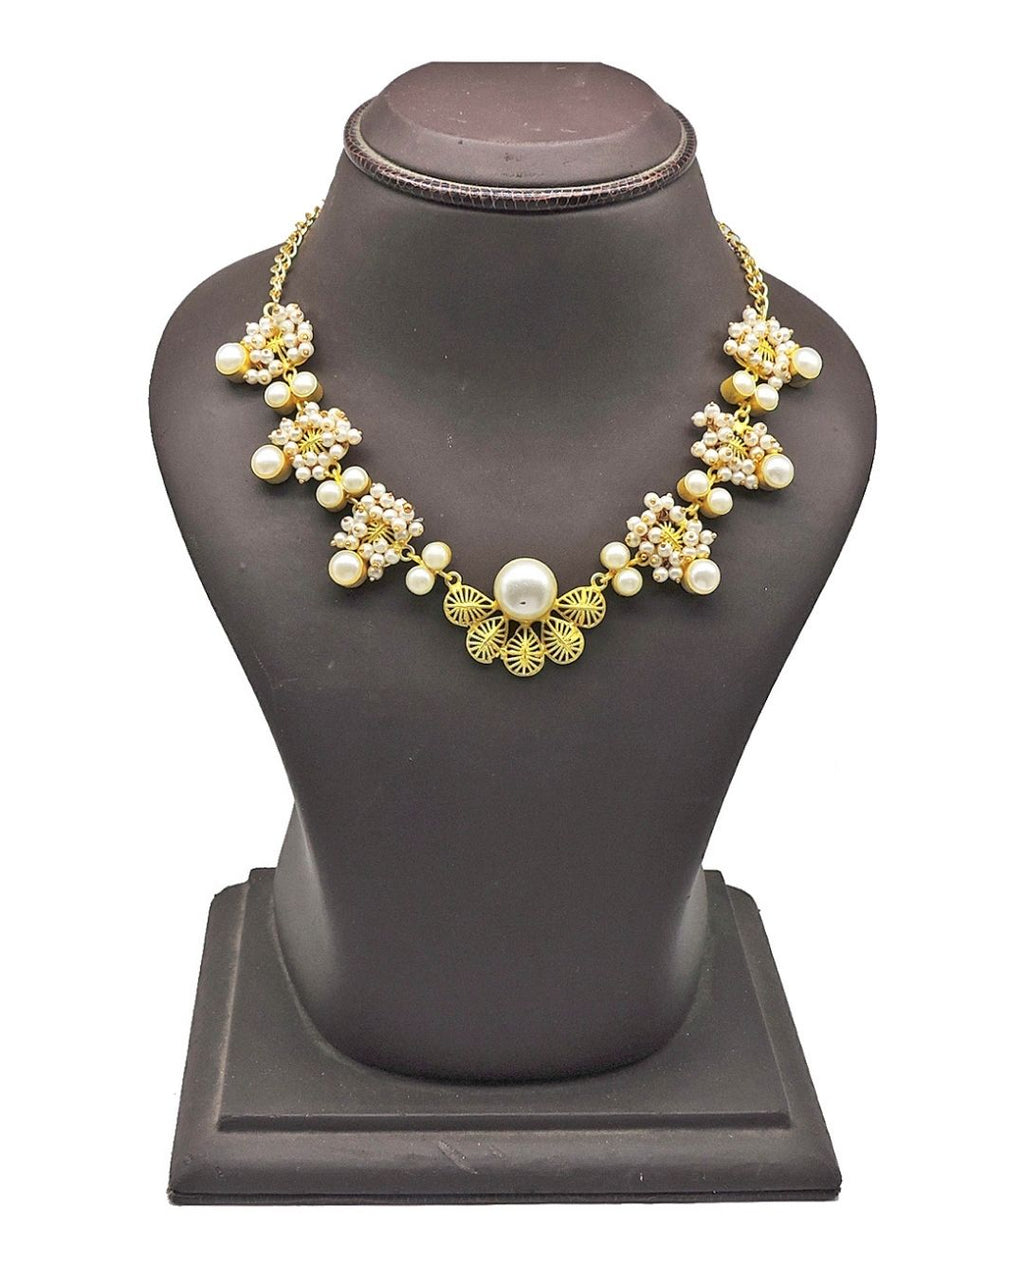 Talia Choker - Necklaces - Handcrafted Jewellery - Made in India - Dubai Jewellery, Fashion & Lifestyle - Dori